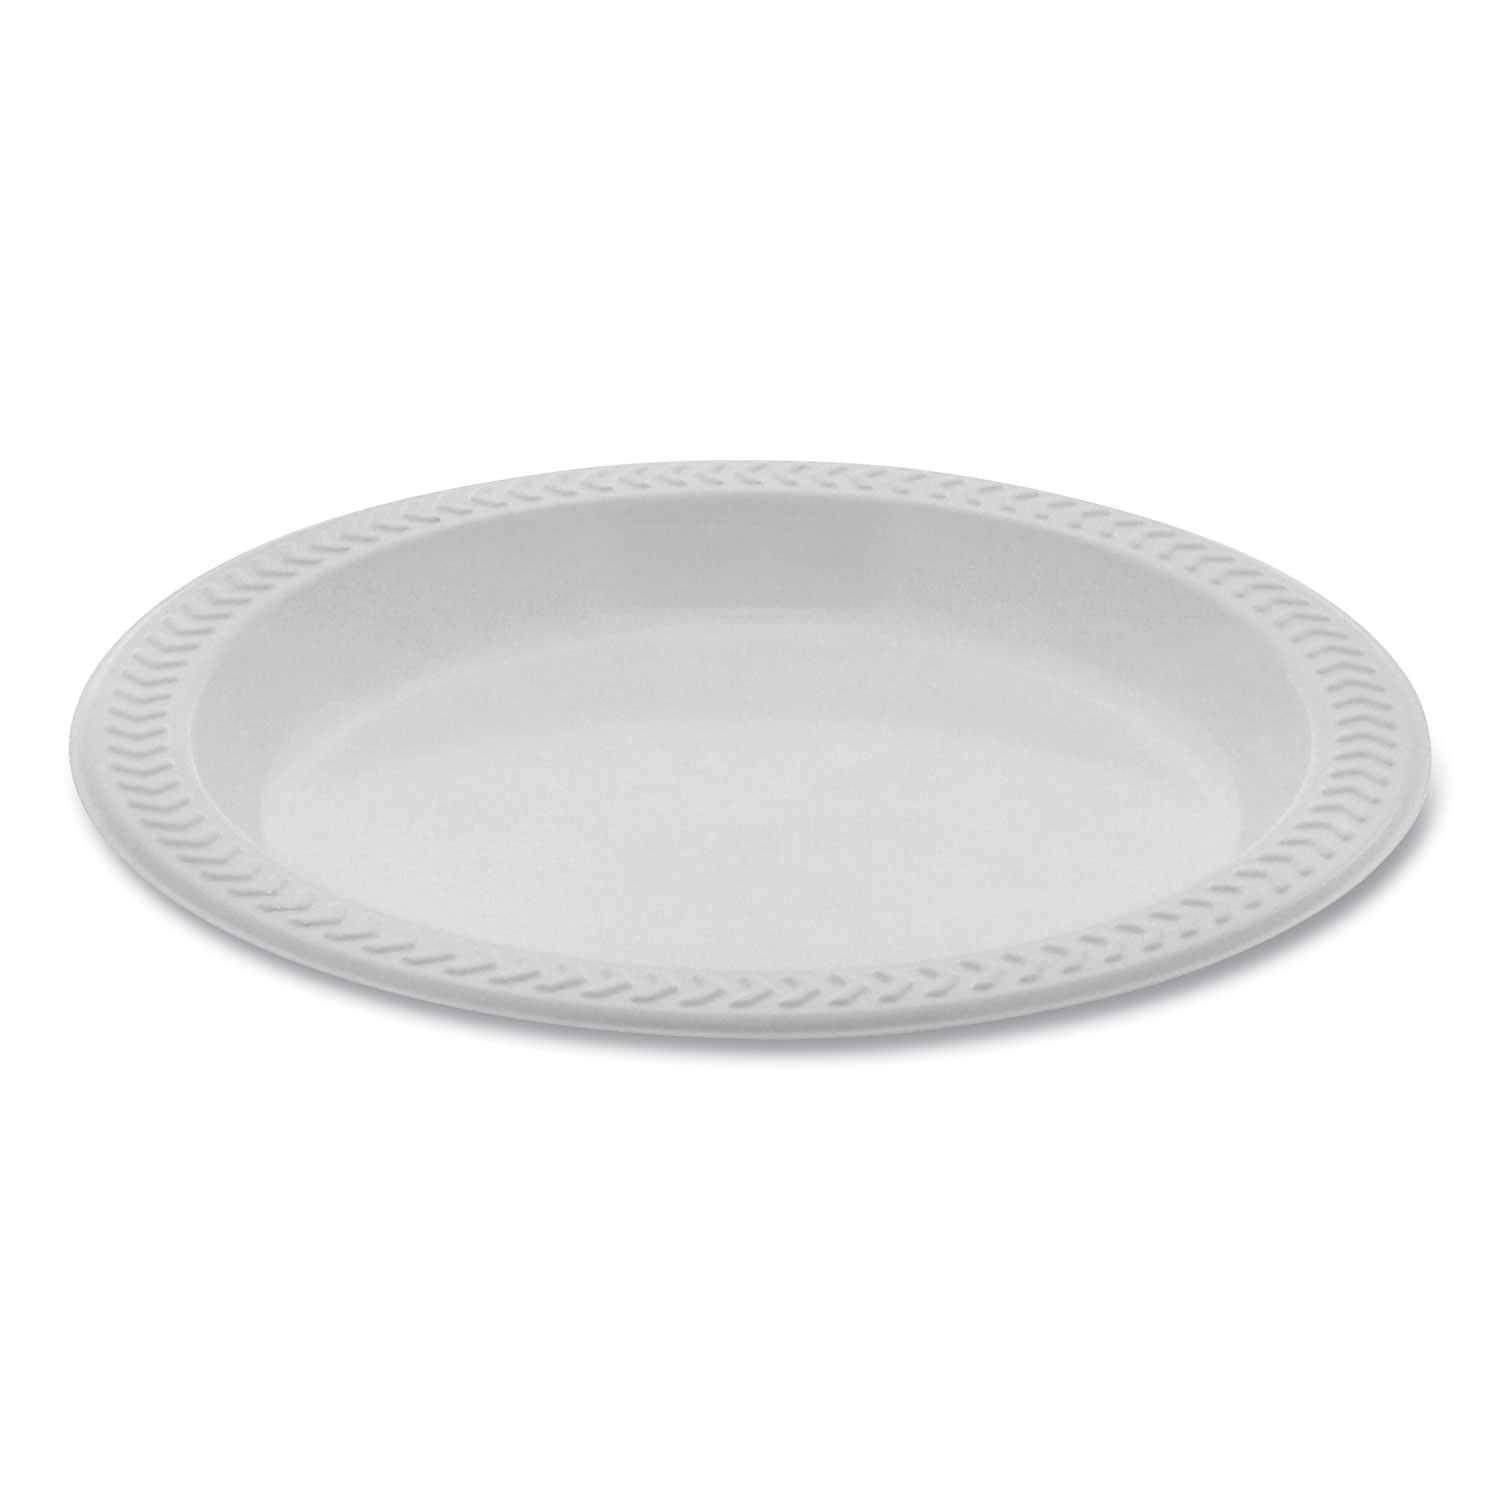  Pactiv YMI6 Meadoware OPS Dinnerware, Plate, 6 Diameter, White, 1,000/Carton (PCTYMI6) 